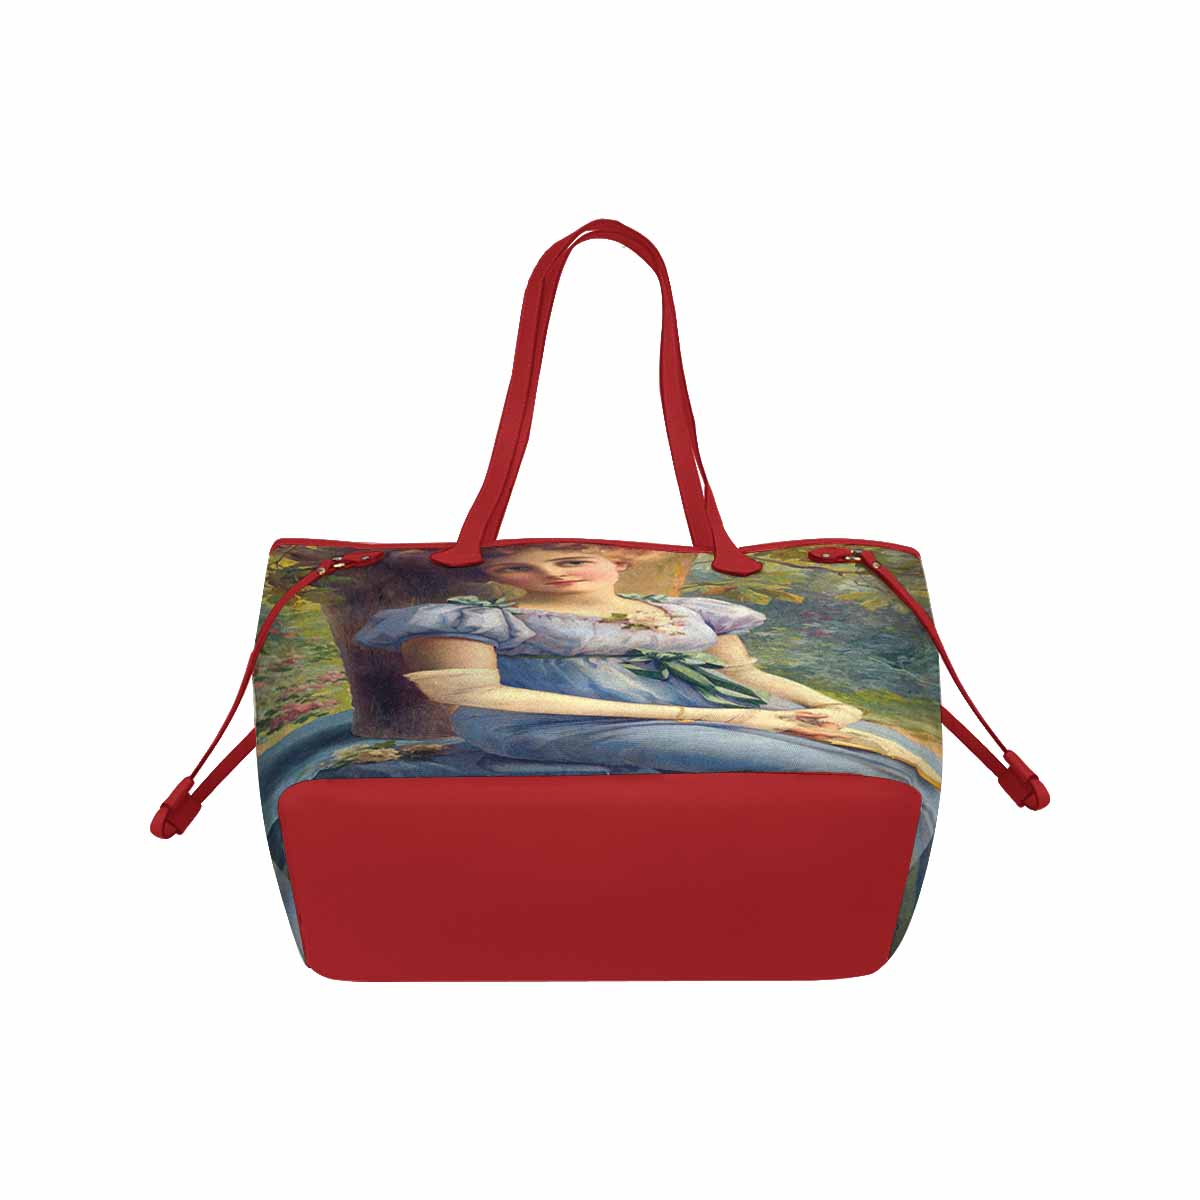 Victorian Lady Design Handbag, Model 1695361, A Sweet Glance, RED TRIM